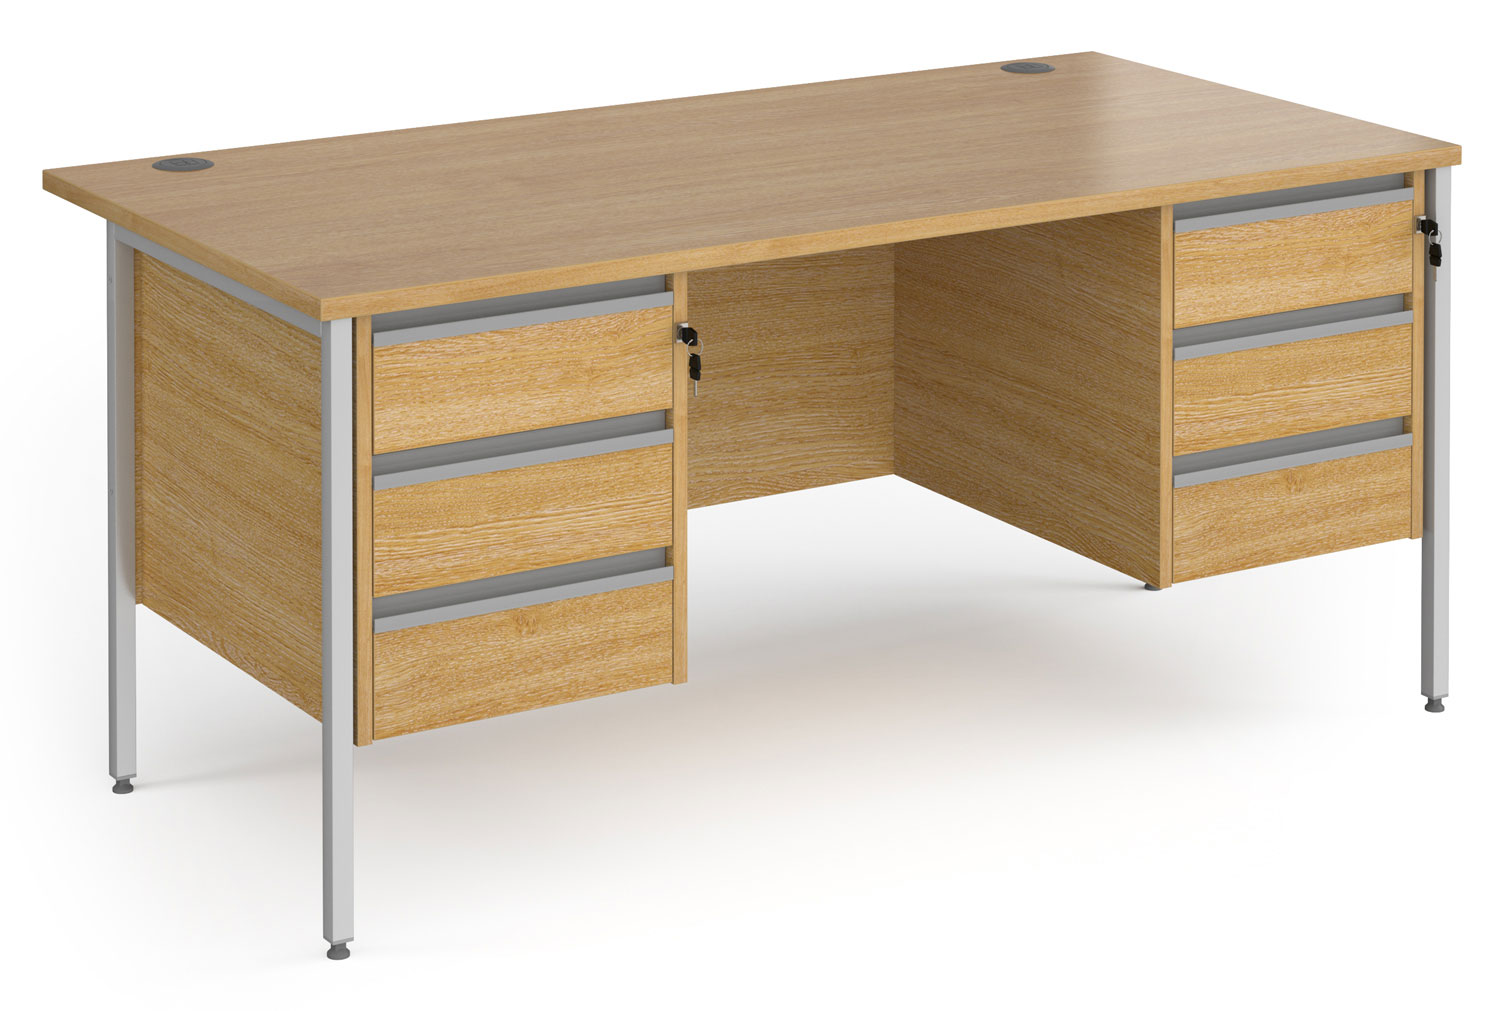 Value Line Classic+ Rectangular H-Leg Office Desk 3+3 Drawers (Silver Leg), 160wx80dx73h (cm), Oak